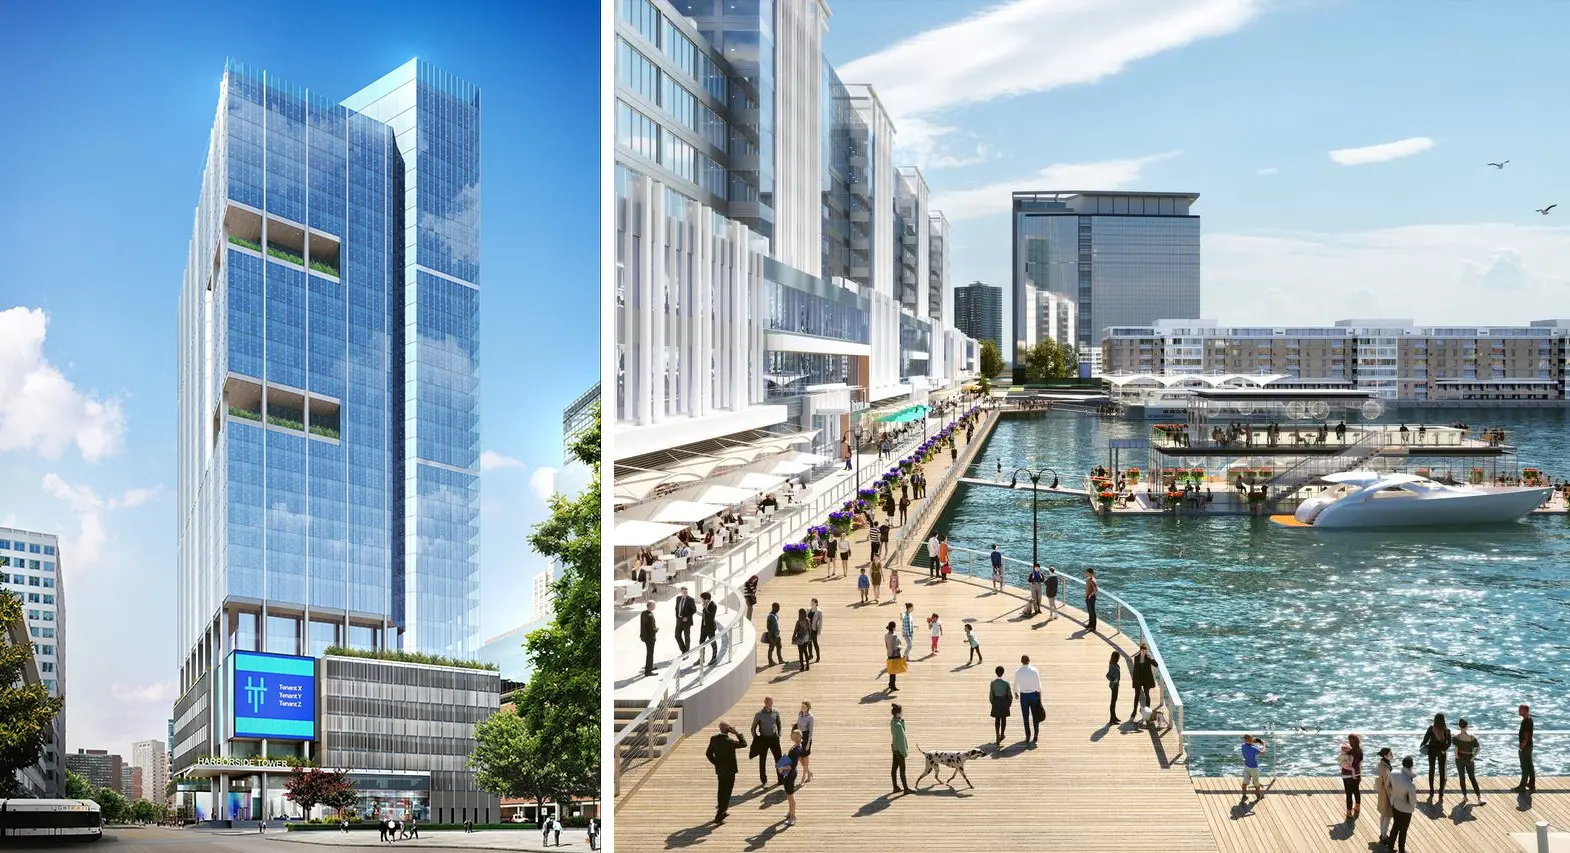 FXFOWLE reveals renderings of 40-story office tower at Jersey City's  Harborside boardwalk